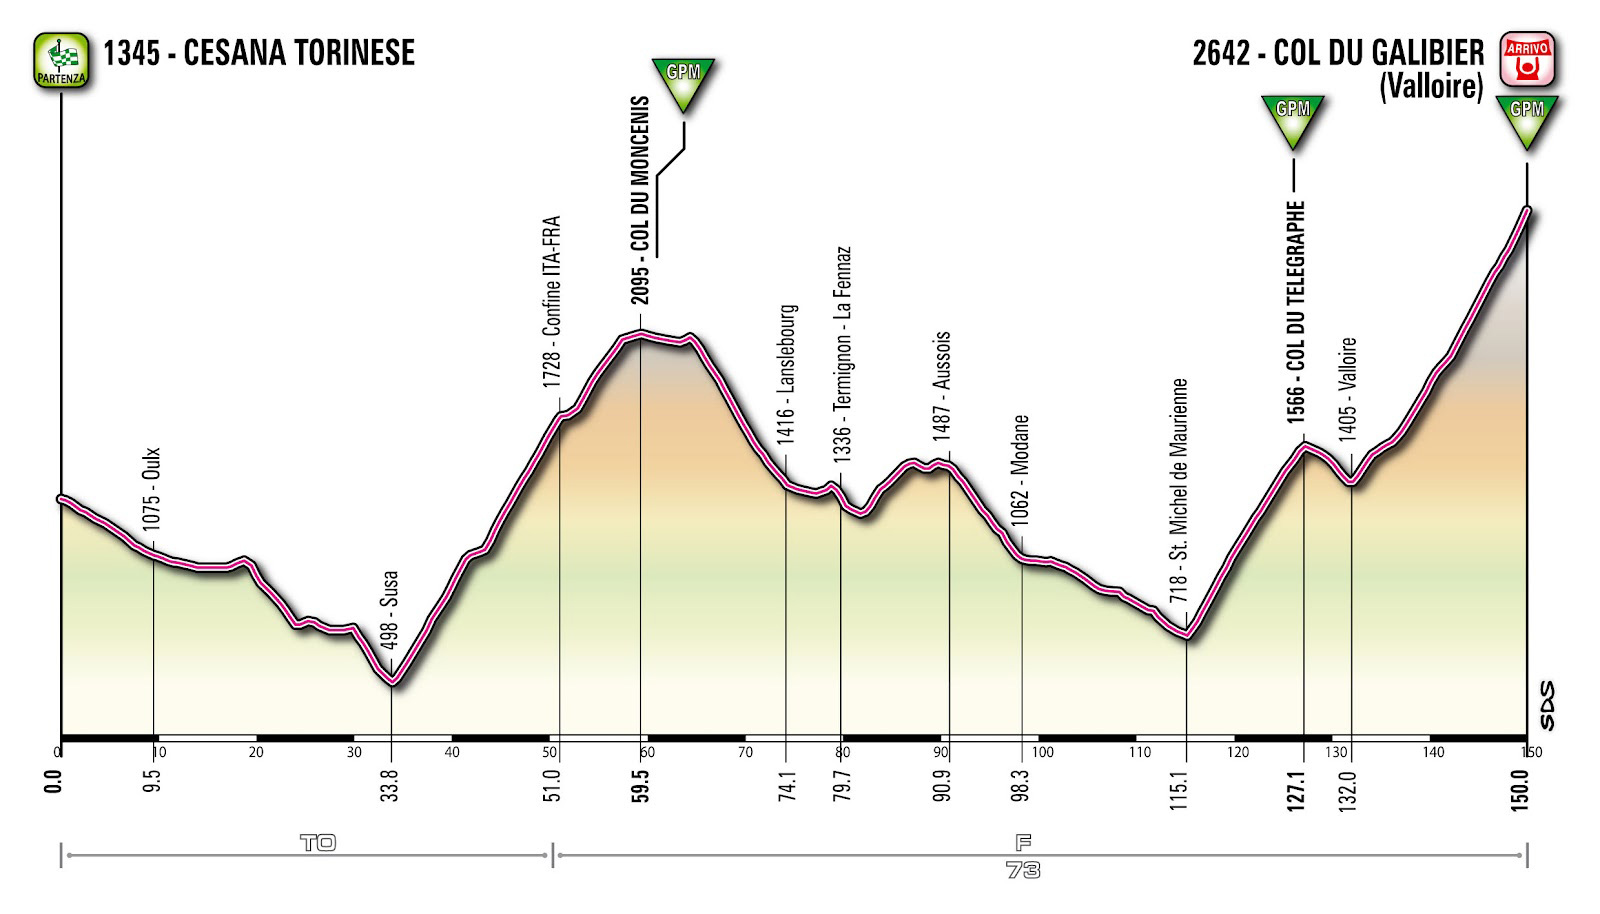 Col du Galibier stage profile (Giro d'Italia 2013)